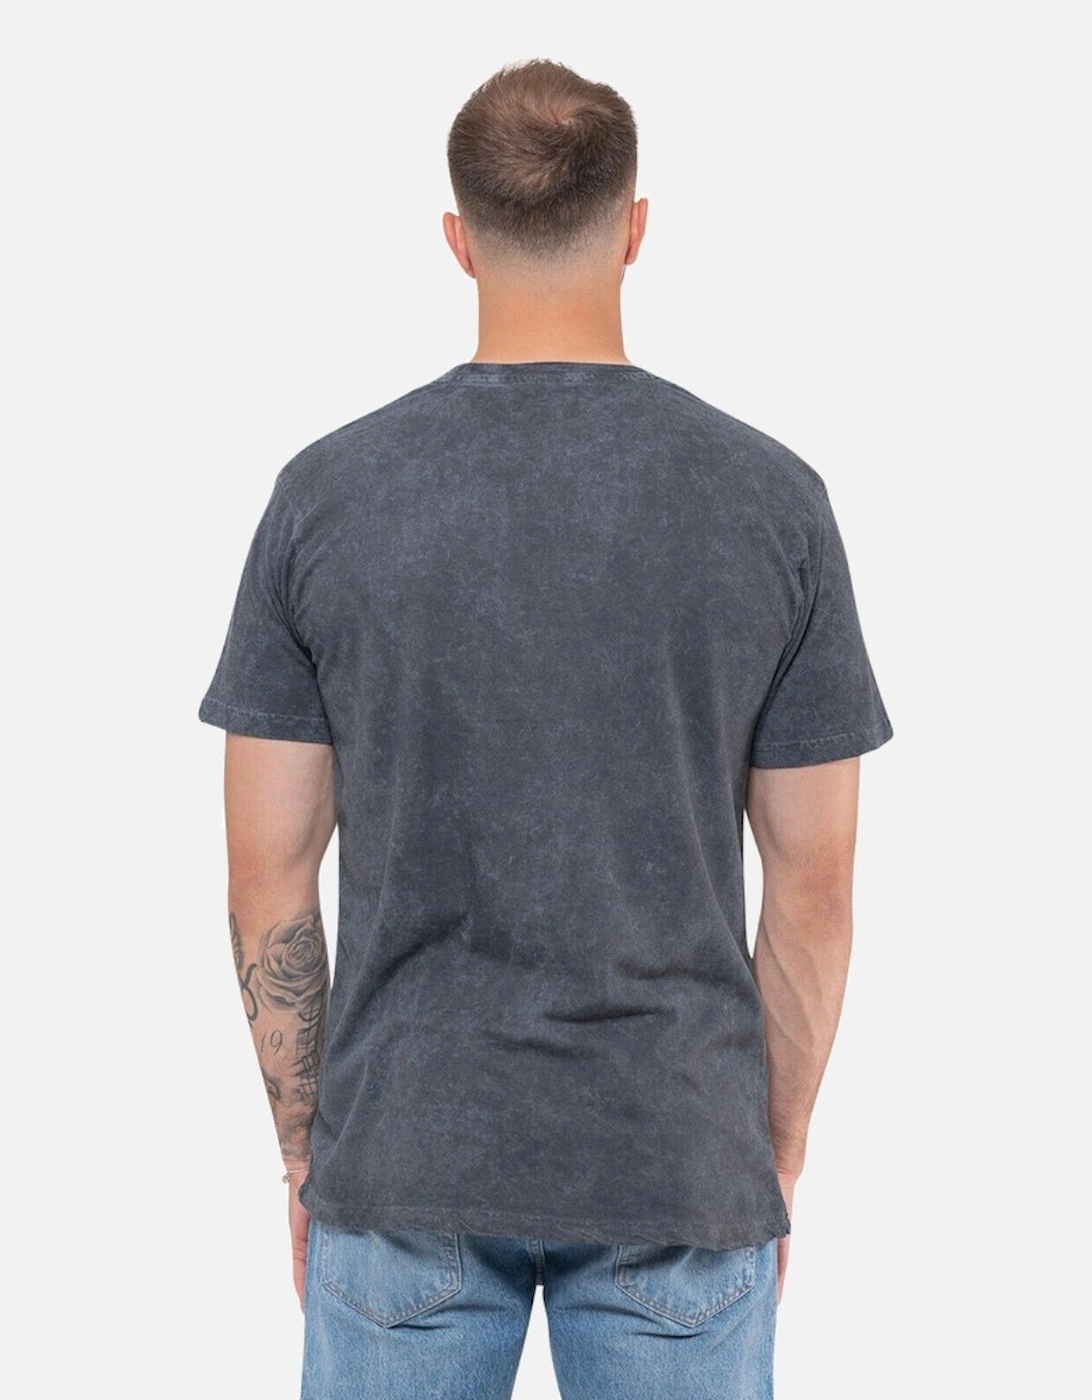 Unisex Adult Riveted T-Shirt